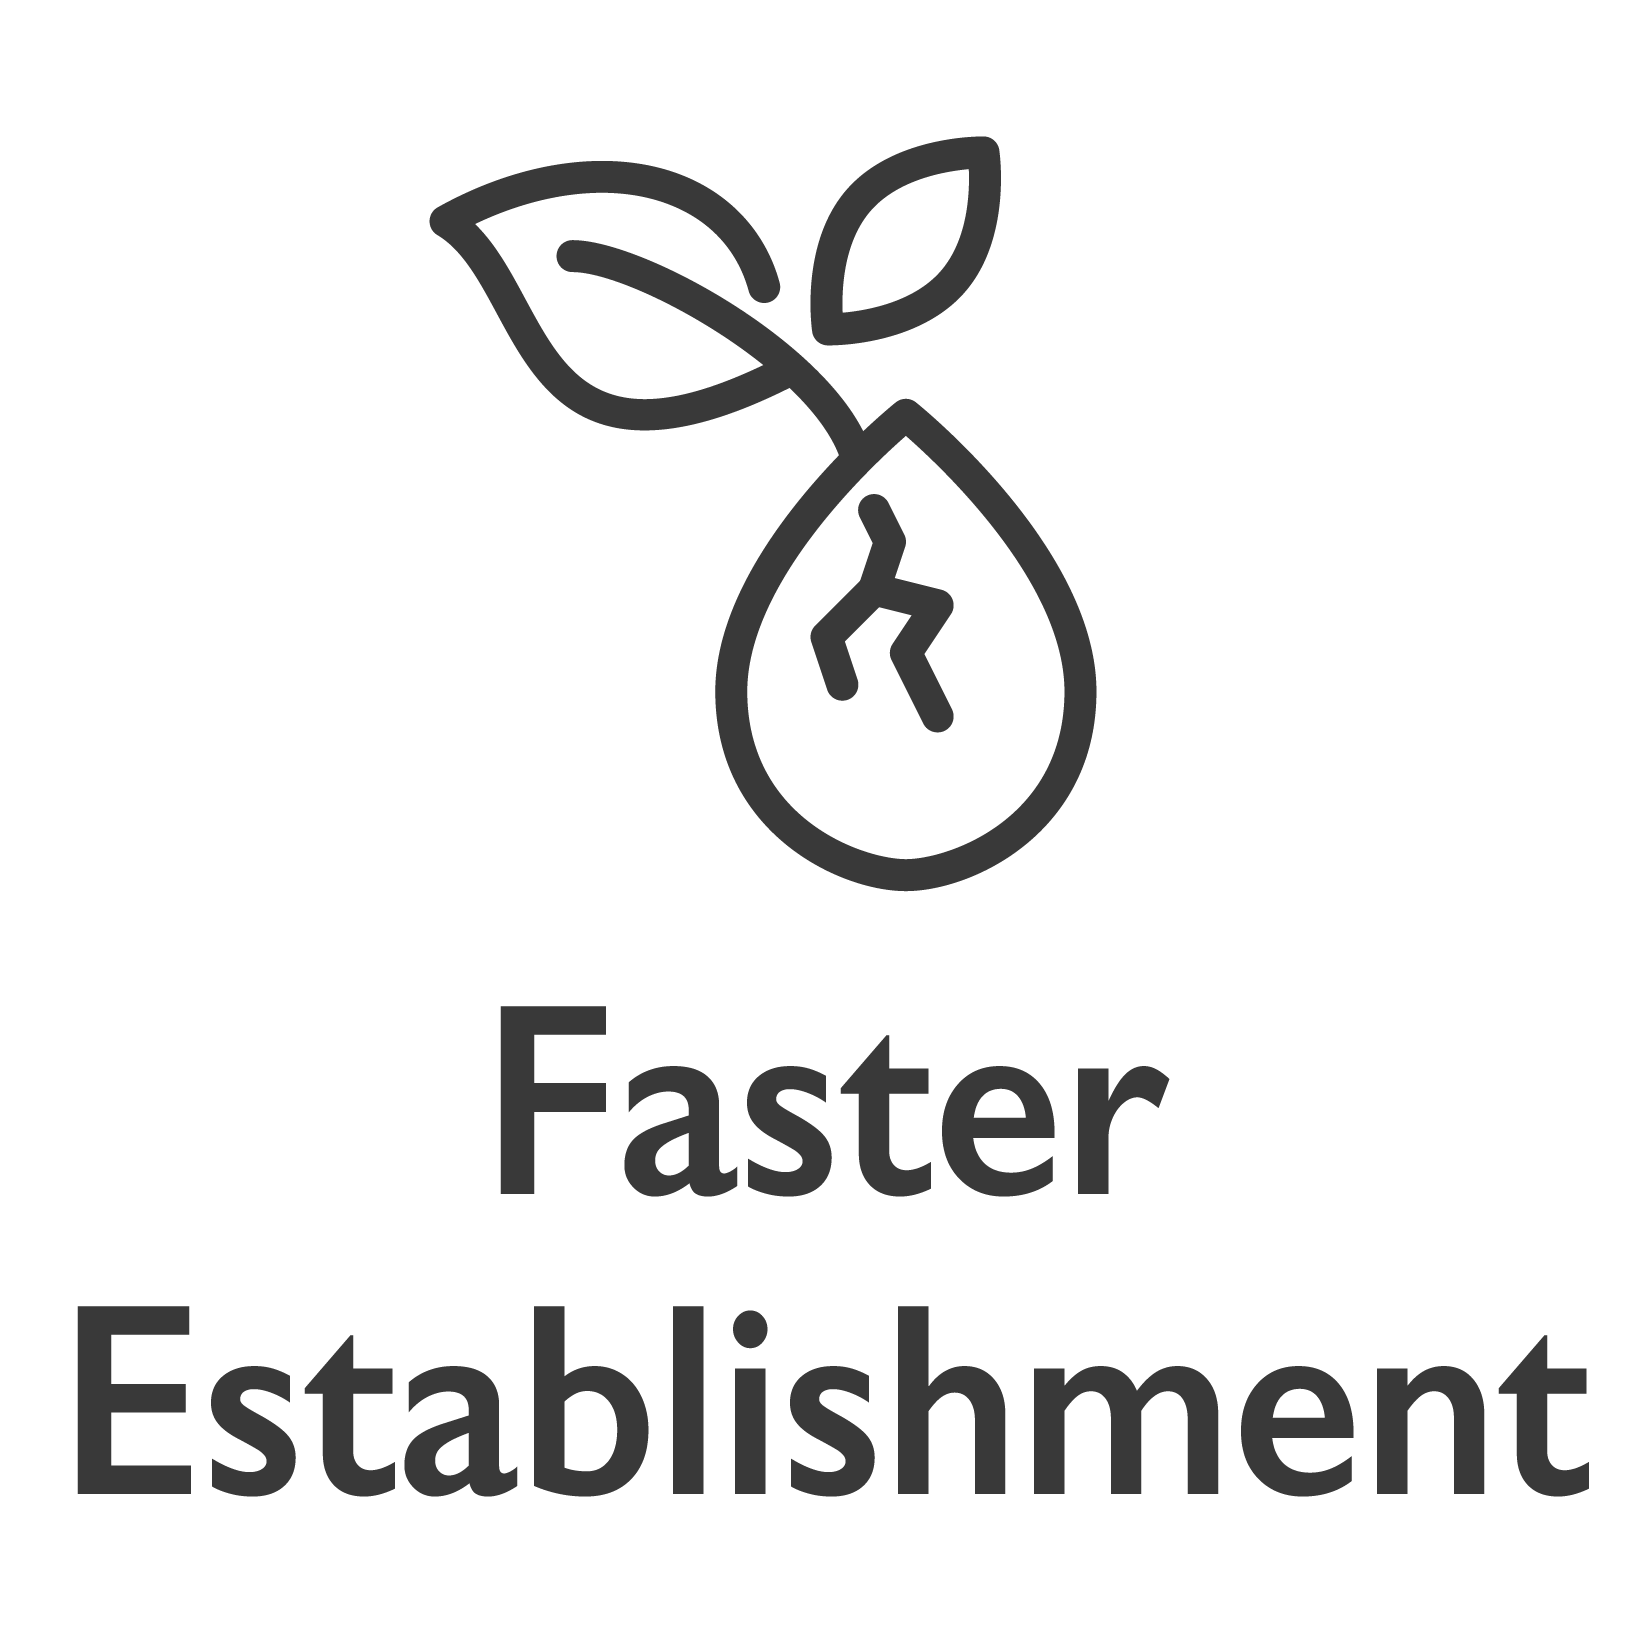 faster establishment